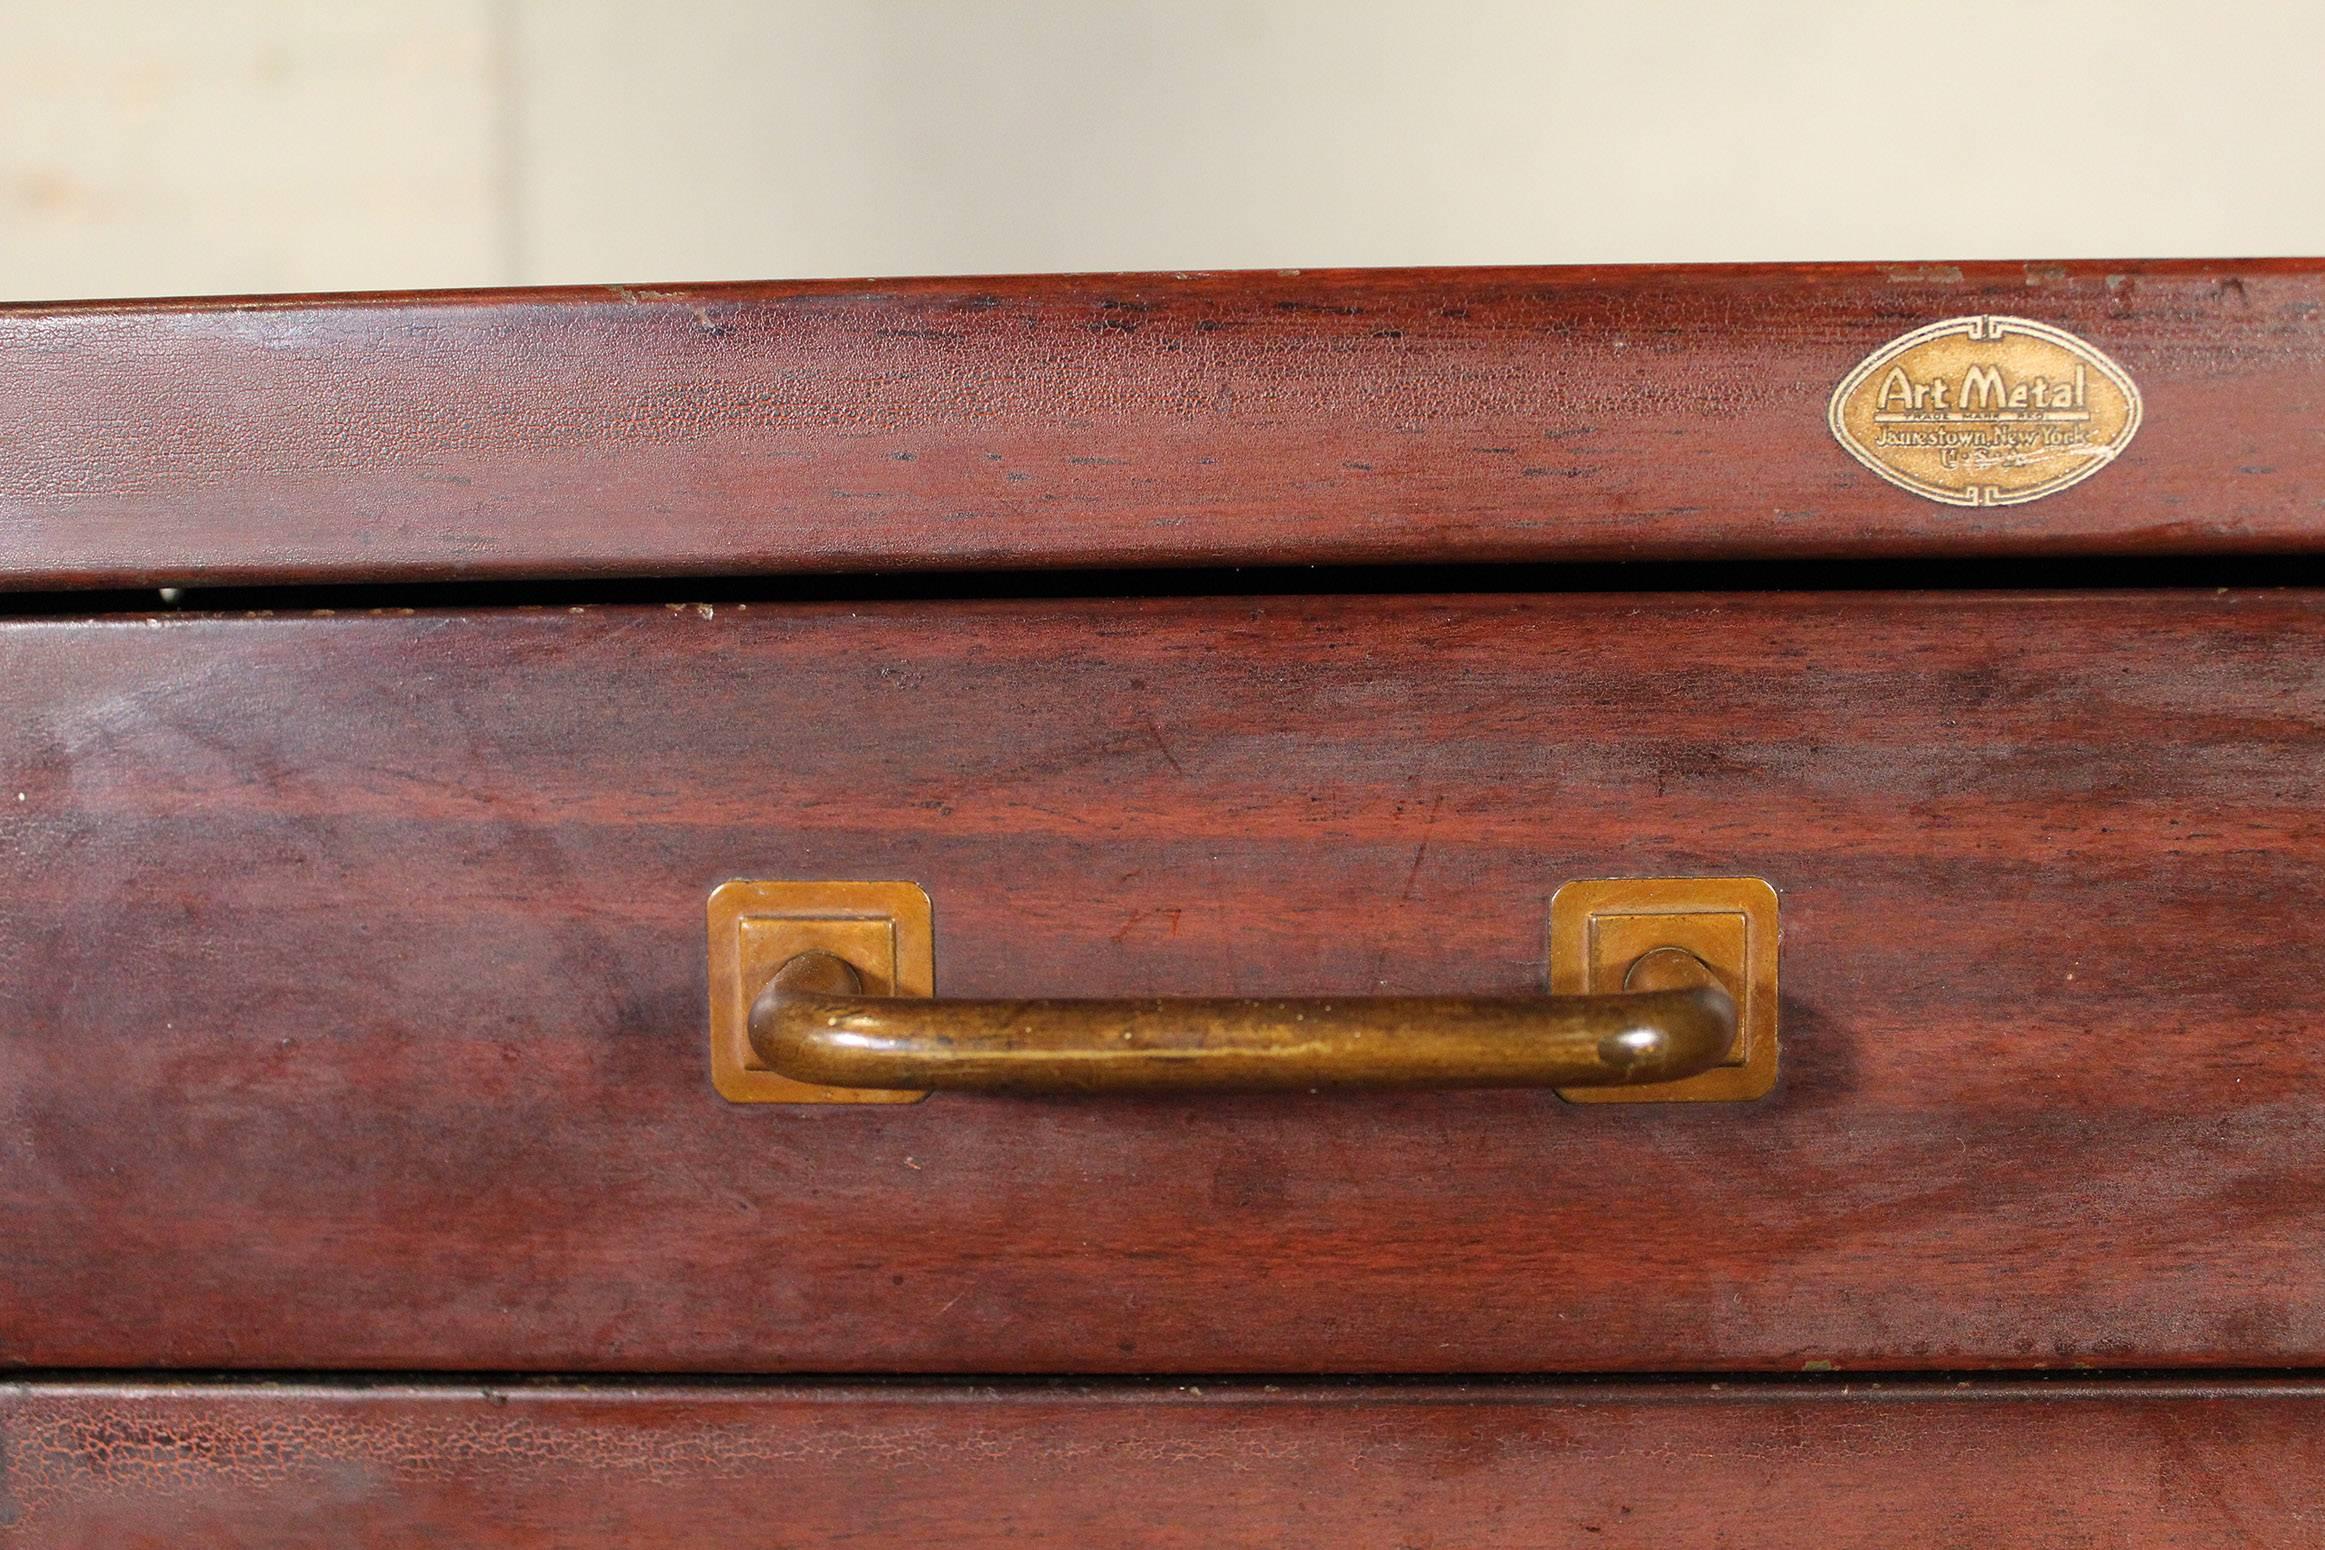 Vintage Art Metal Flat File Storage Cabinet with Brass Hardware 1